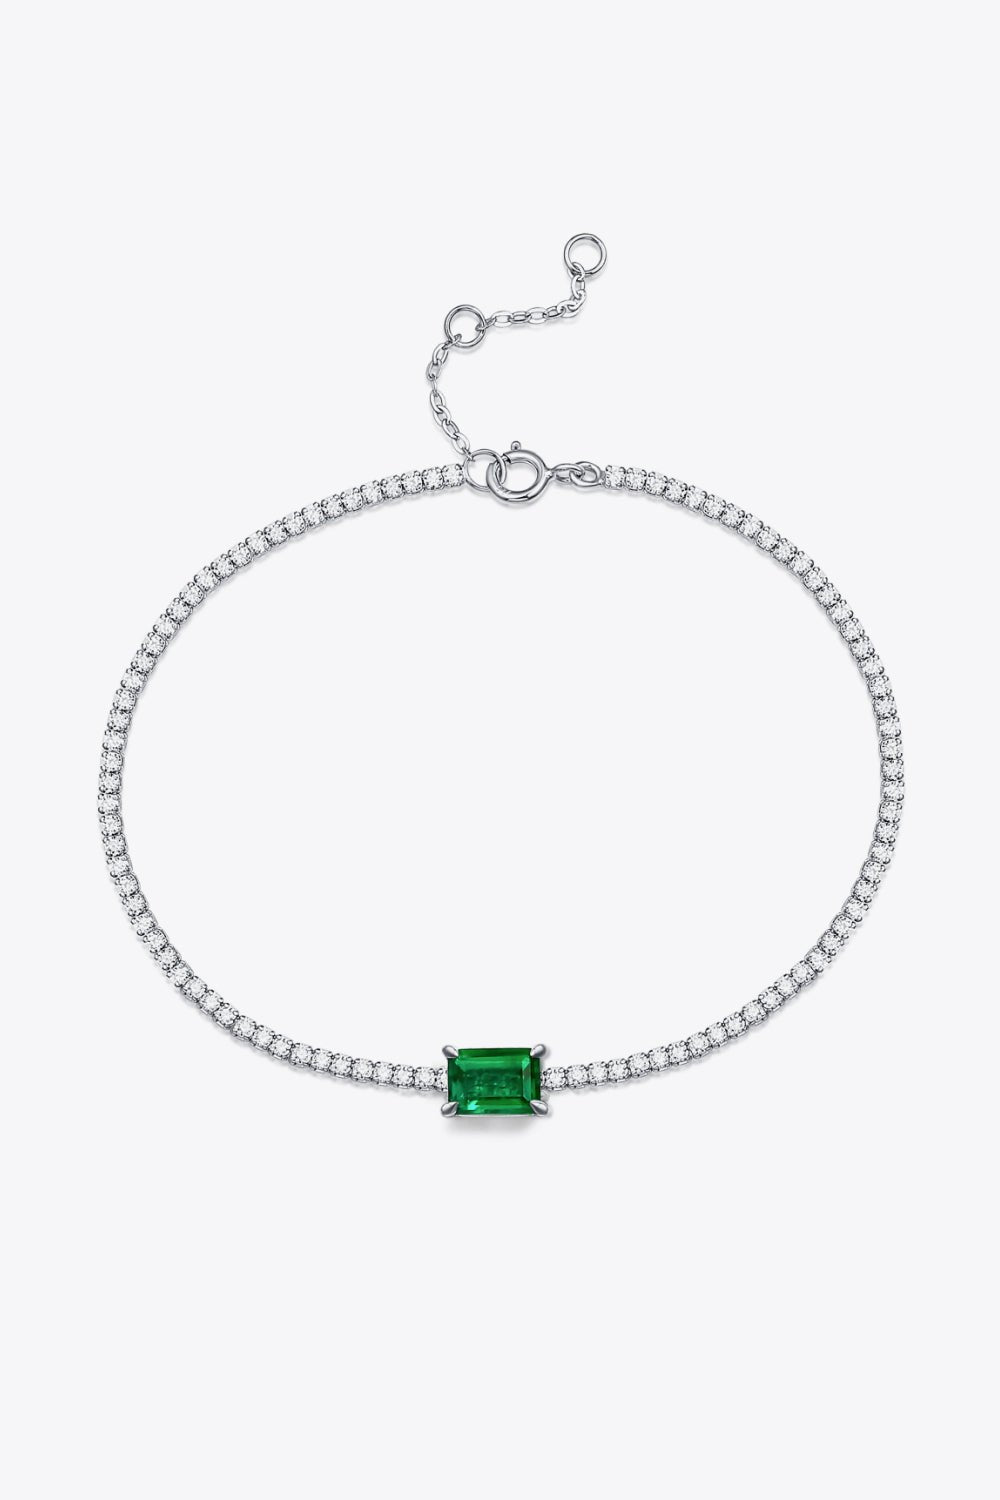 1 Carat Lab-Grown Emerald Bracelet - Shah S. Sahota